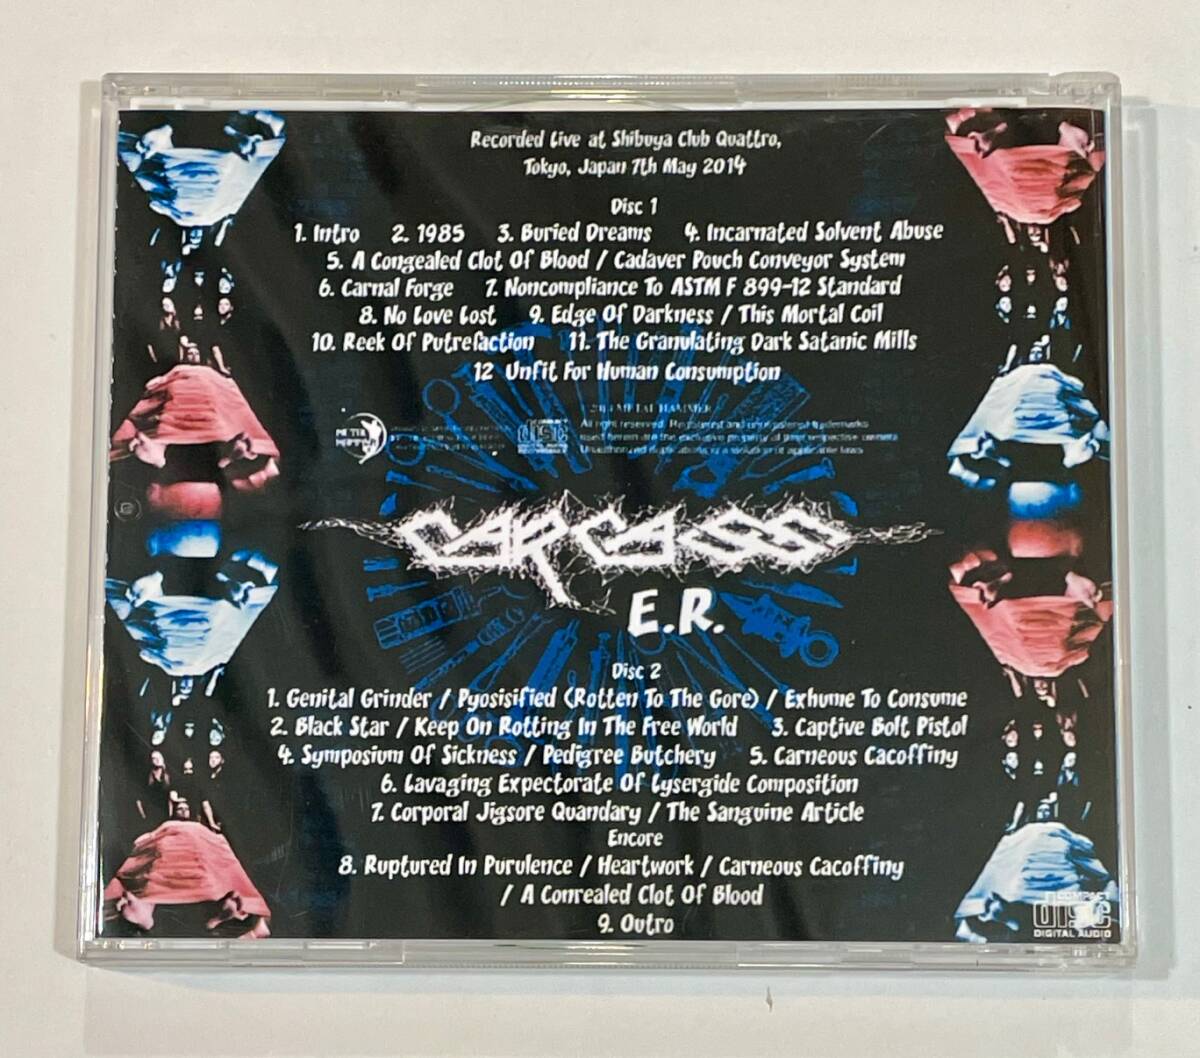 [2CD-R] Carcass E.R. [Live at Shibuya Club Quattro, Tokyo, Japan 7th May 2014] カーカス ビル・スティアー Bill Steerの画像2